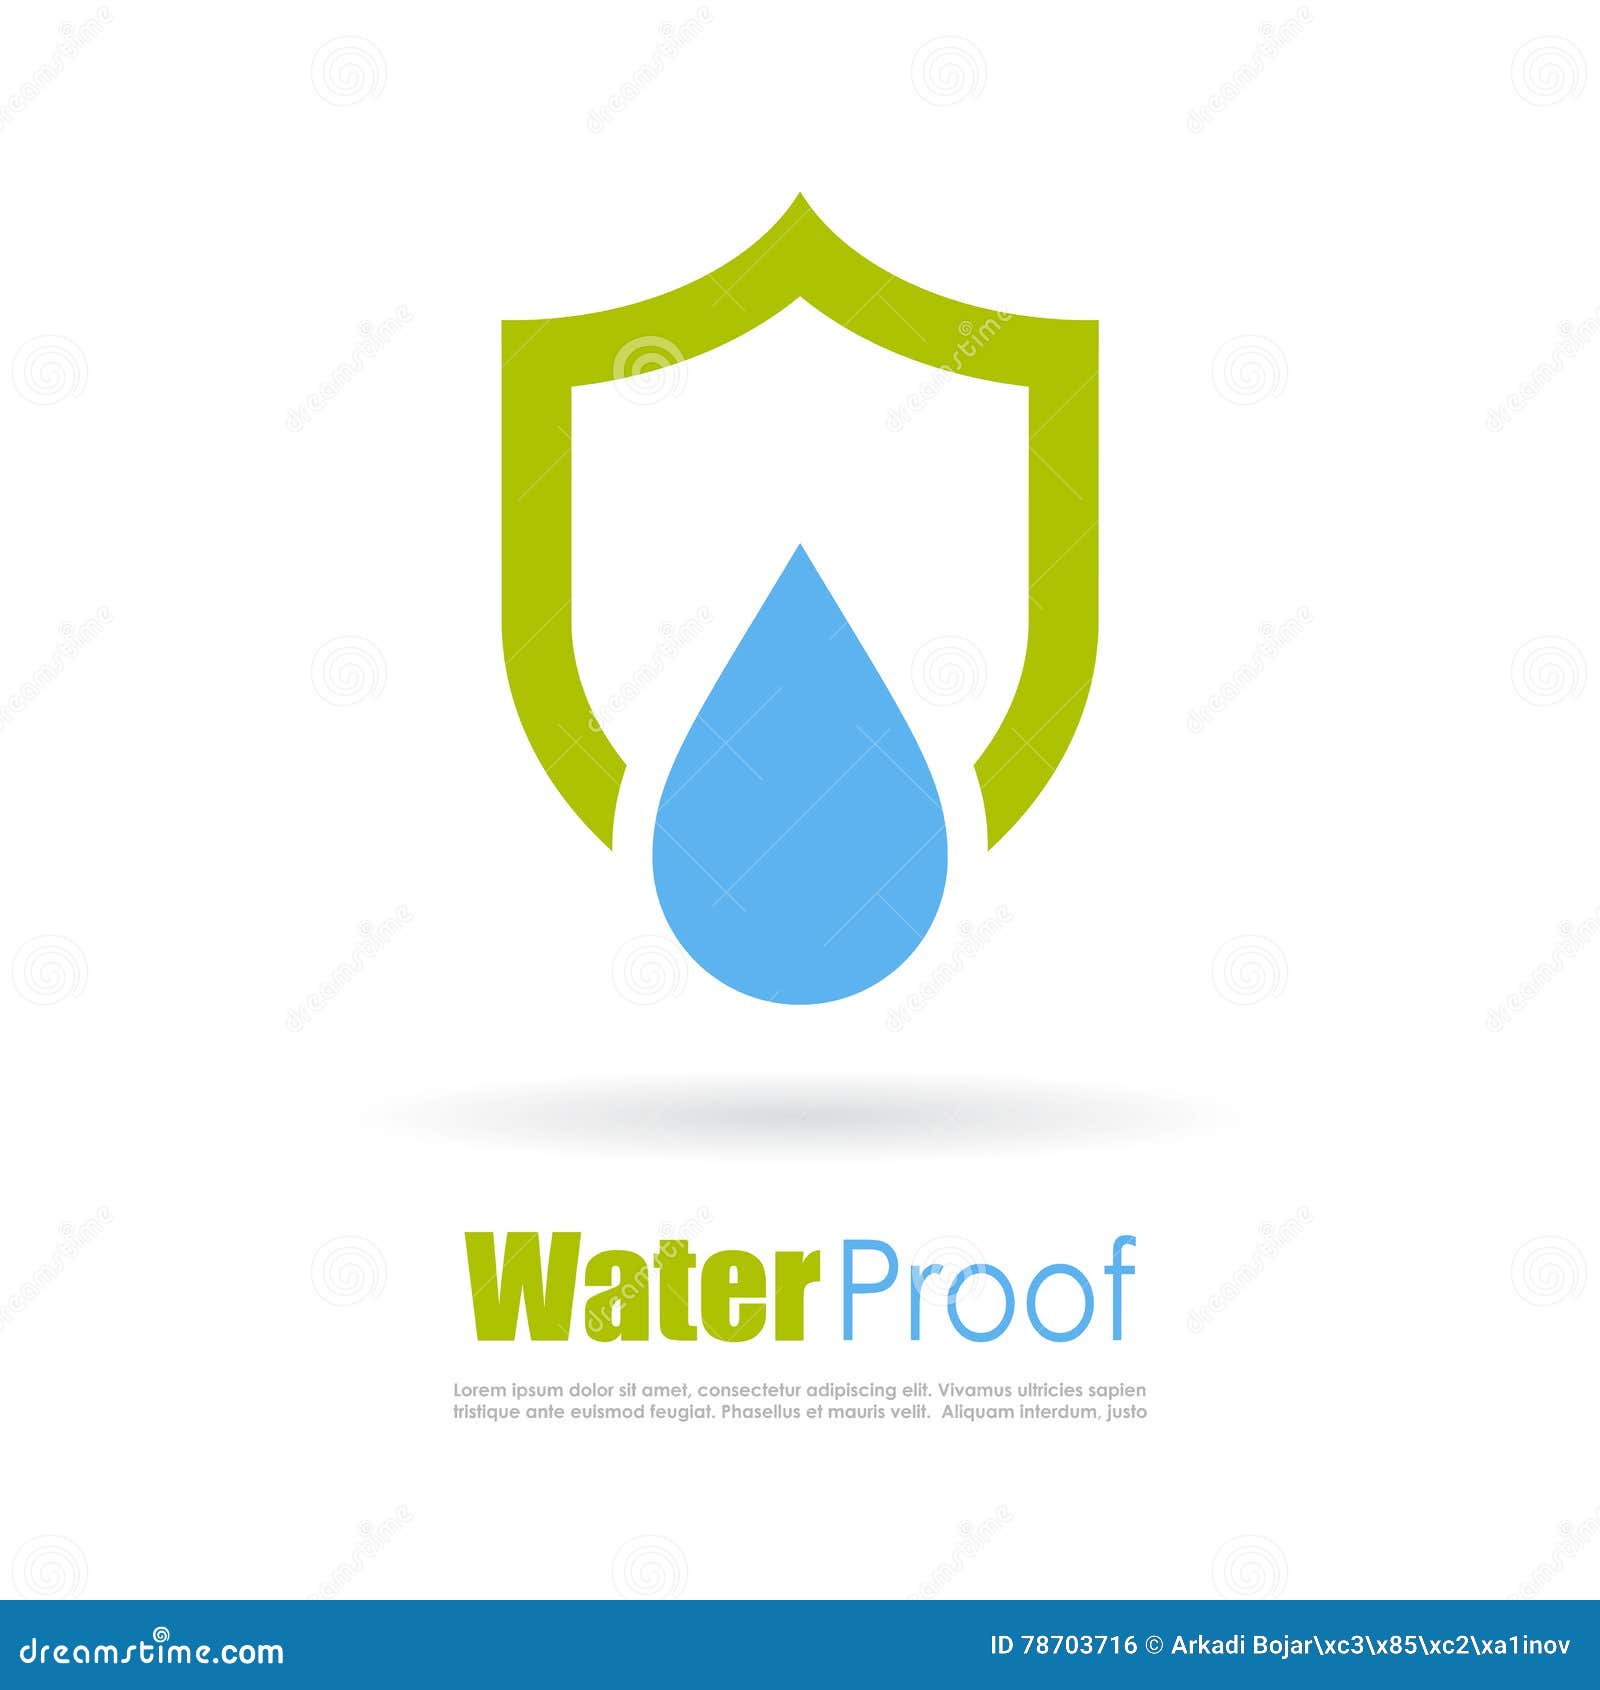 water proof logo